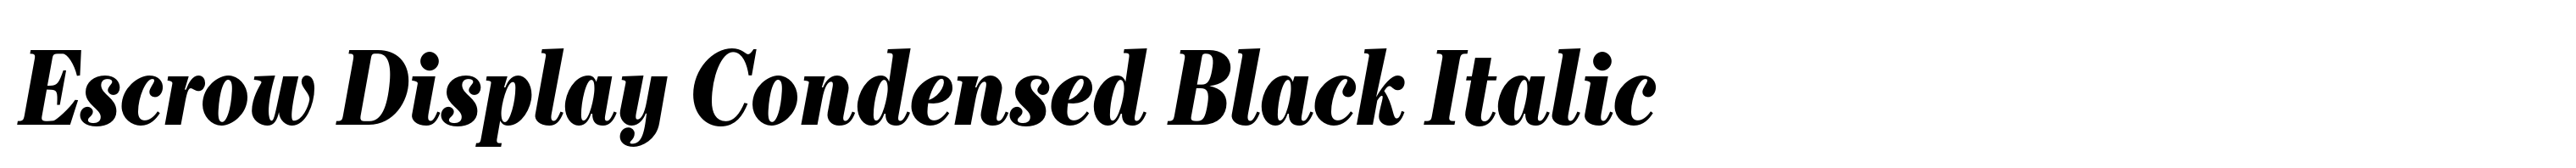 Escrow Display Condensed Black Italic